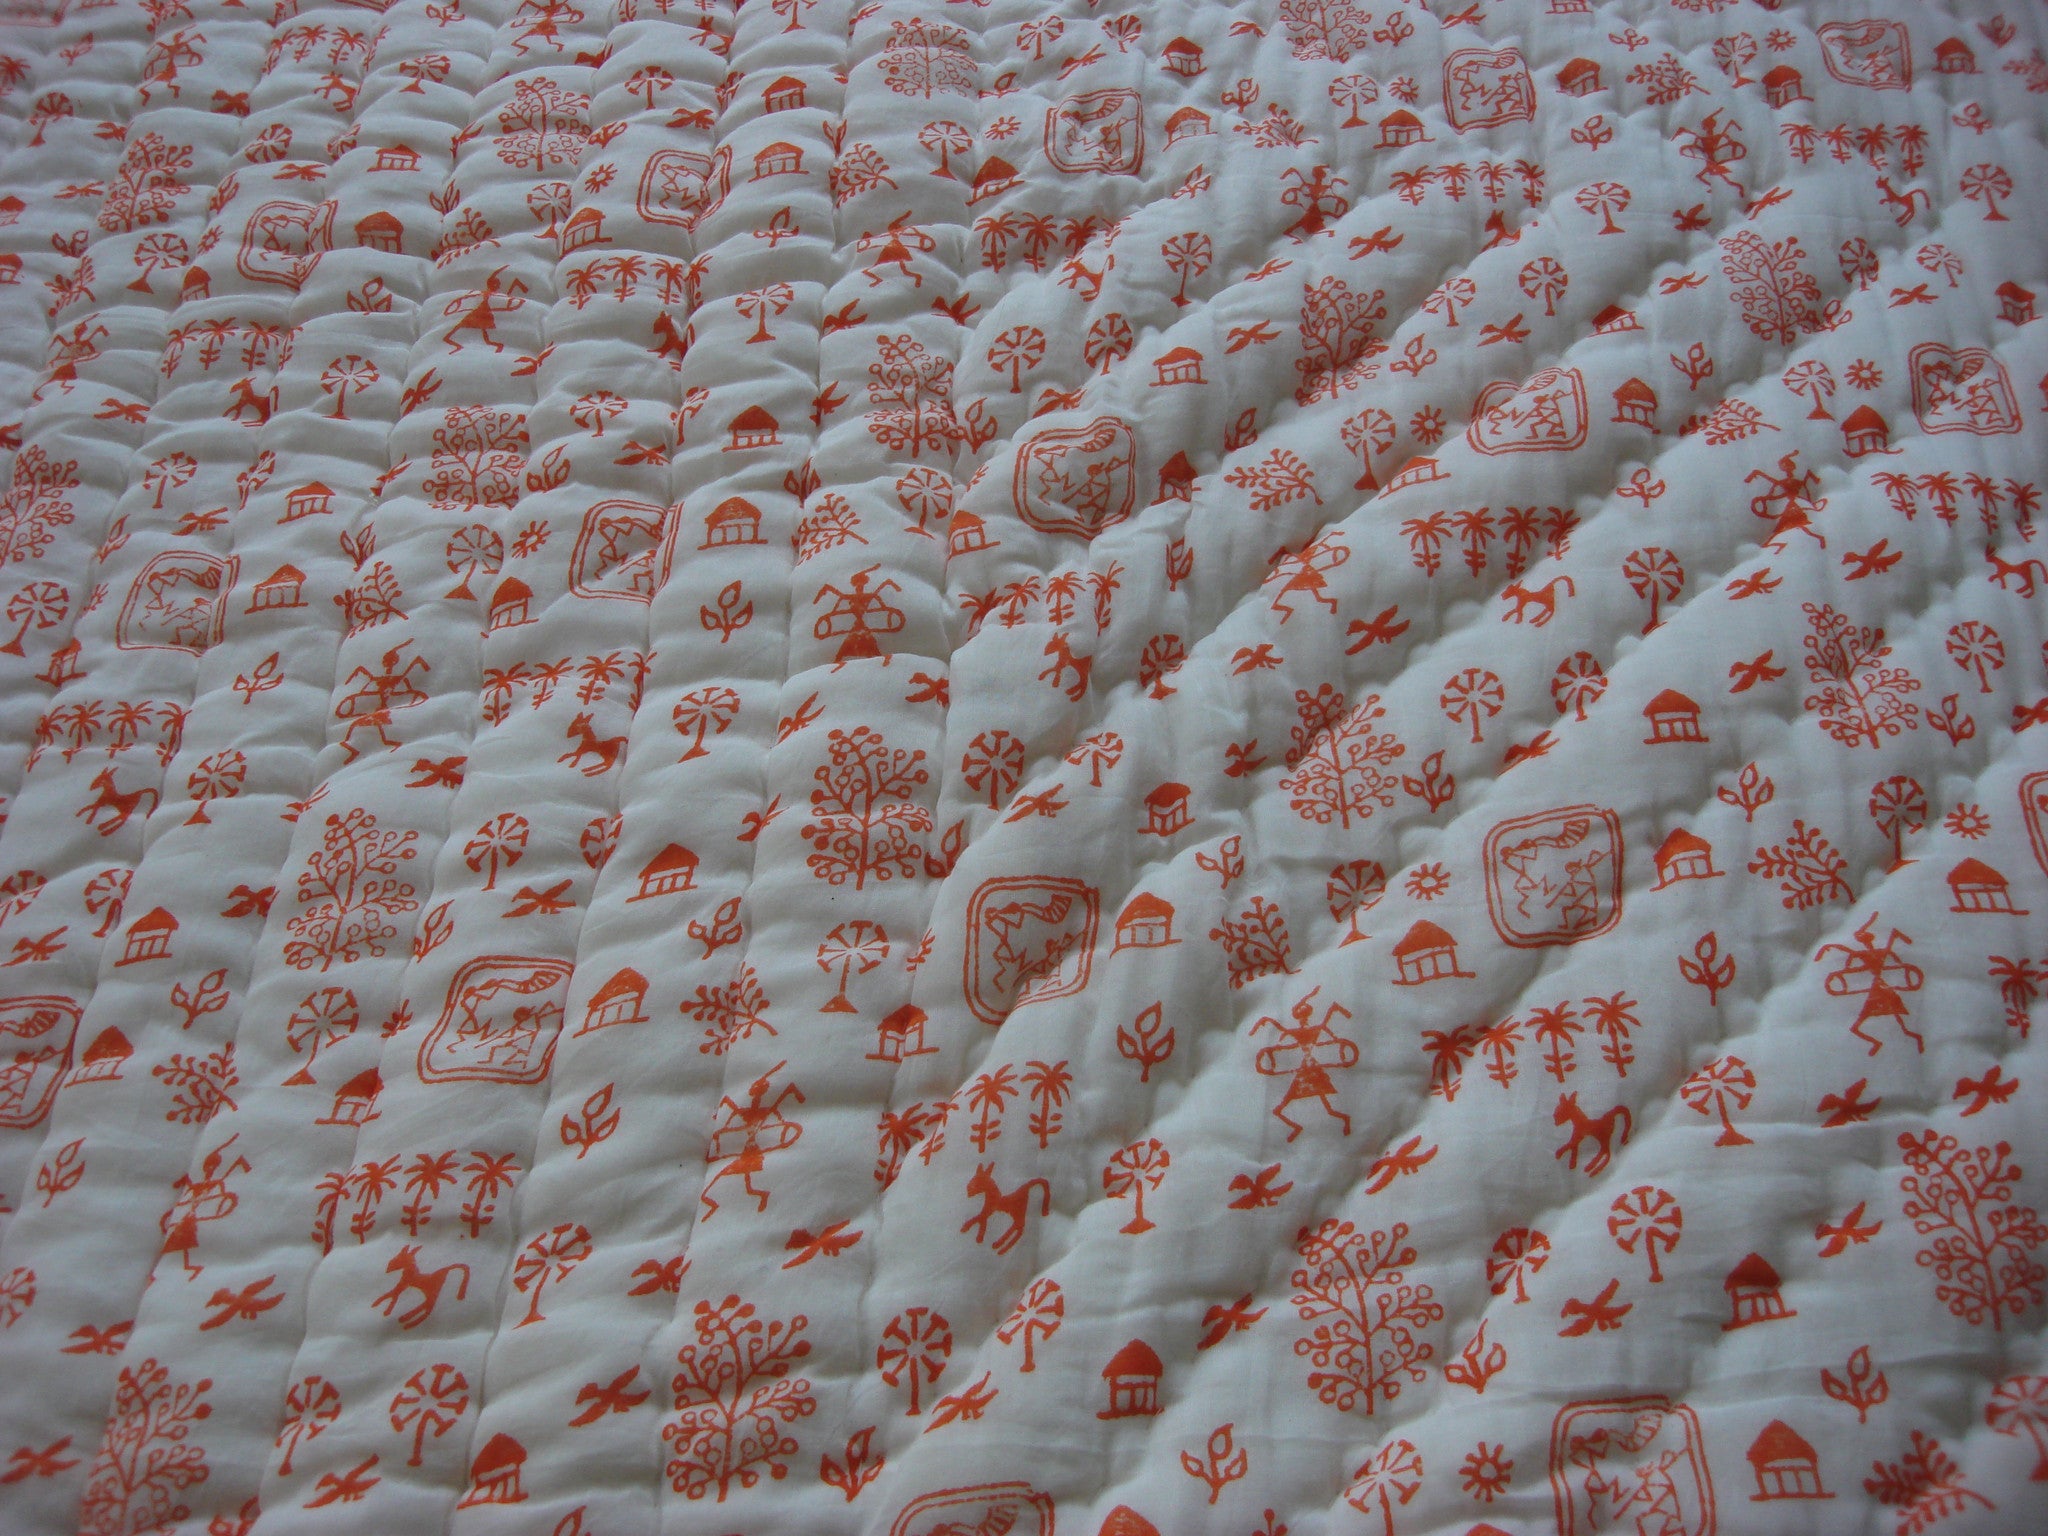 QBP 109 - Handmade, reversible, cotton, block printed quilt in sunny orange Egyptian design - Pentagon Crafts